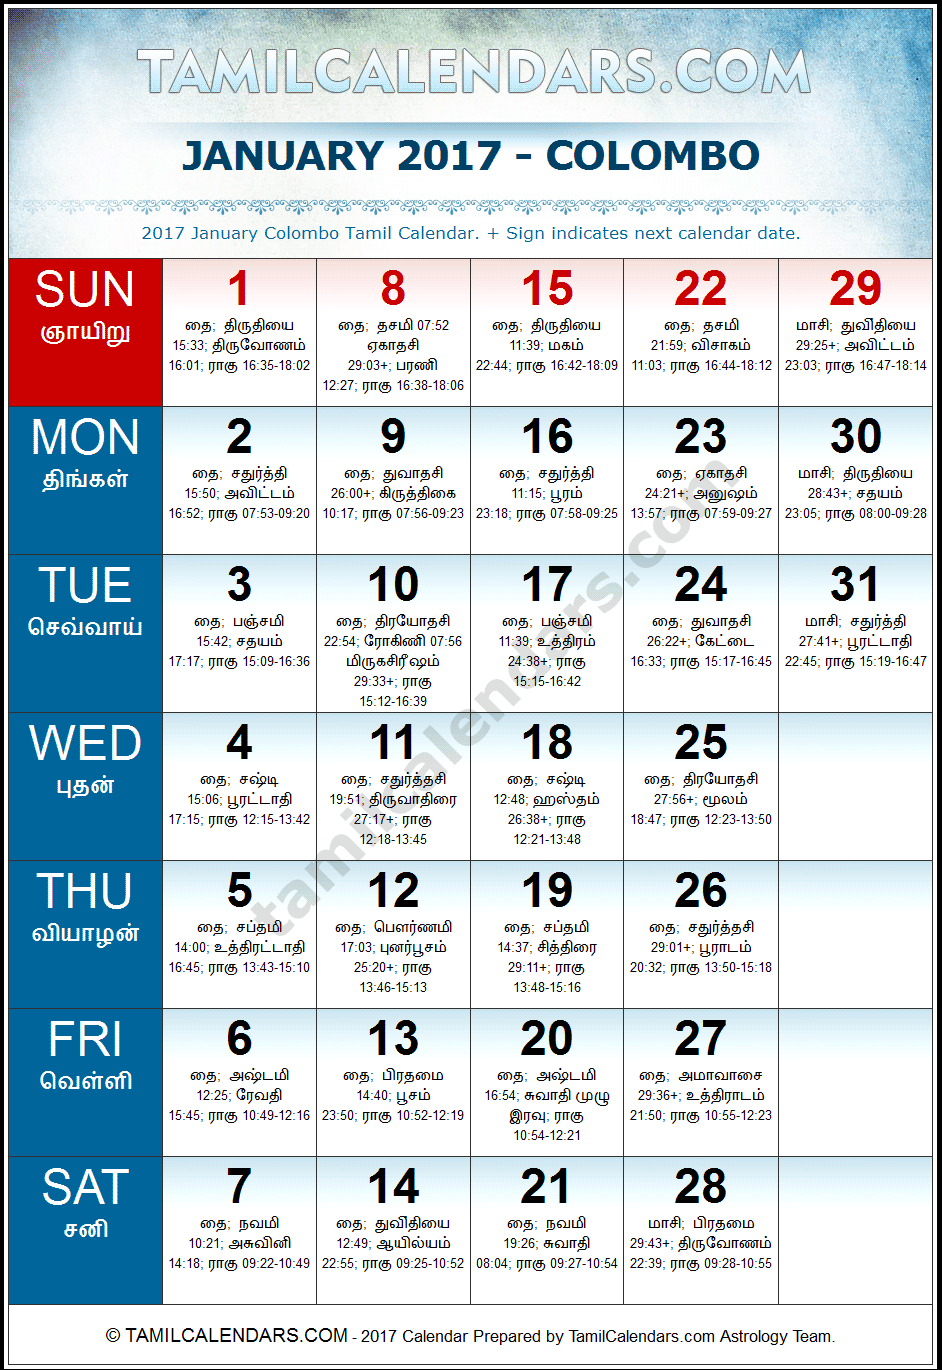 January 2017 Tamil Calendar for Sri Lanka (Colombo)